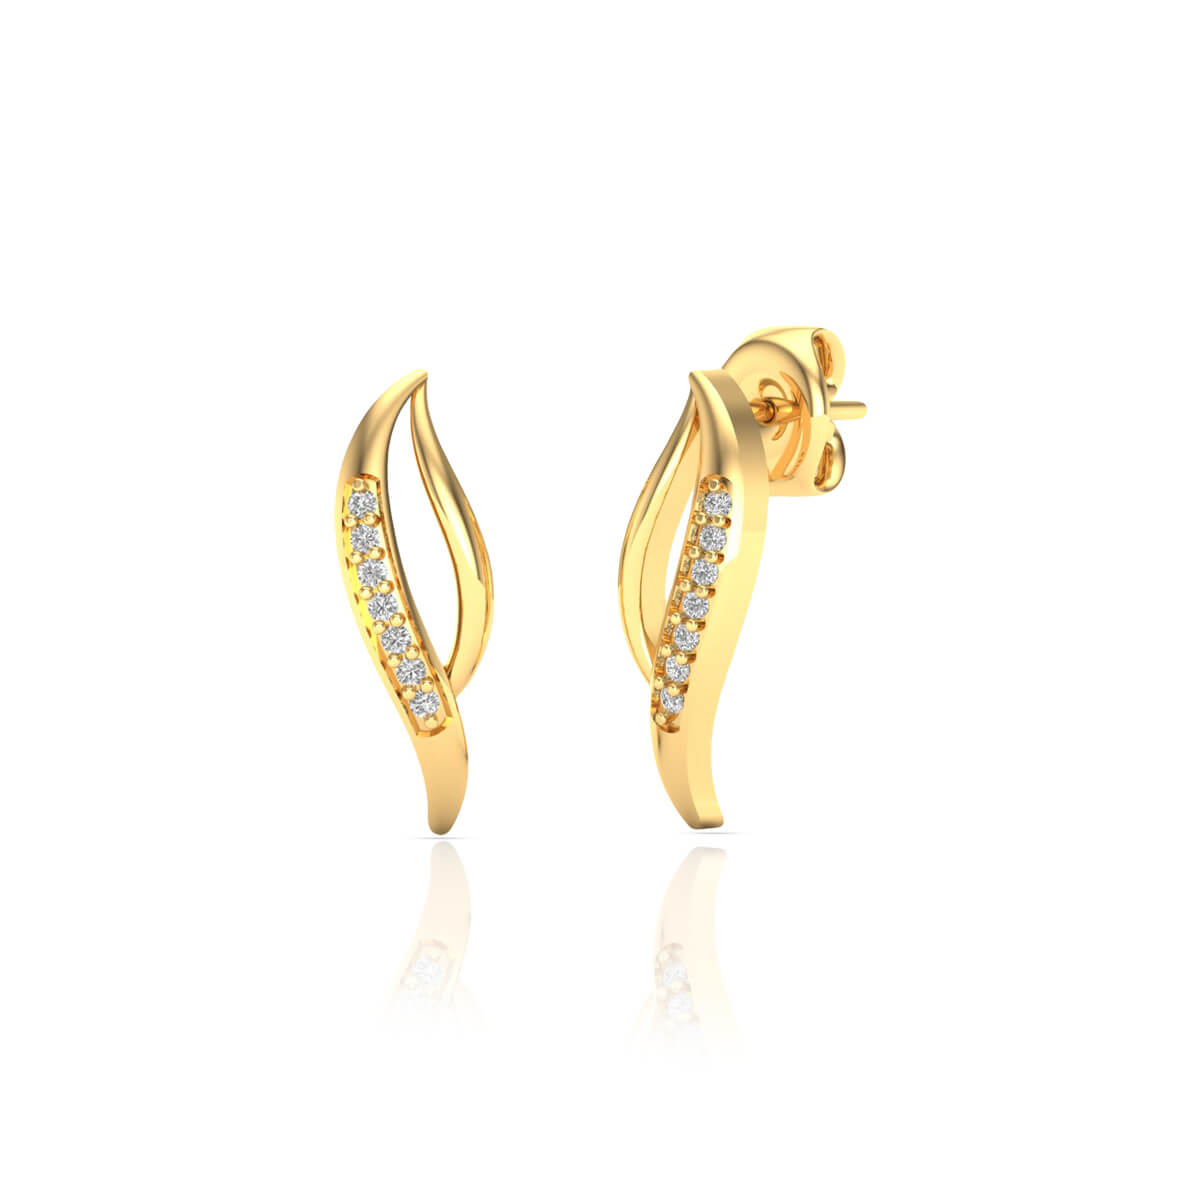 Dazzling Gold Earrings In 22K Gold By Lagu Bandhu - Lagu Bandhu